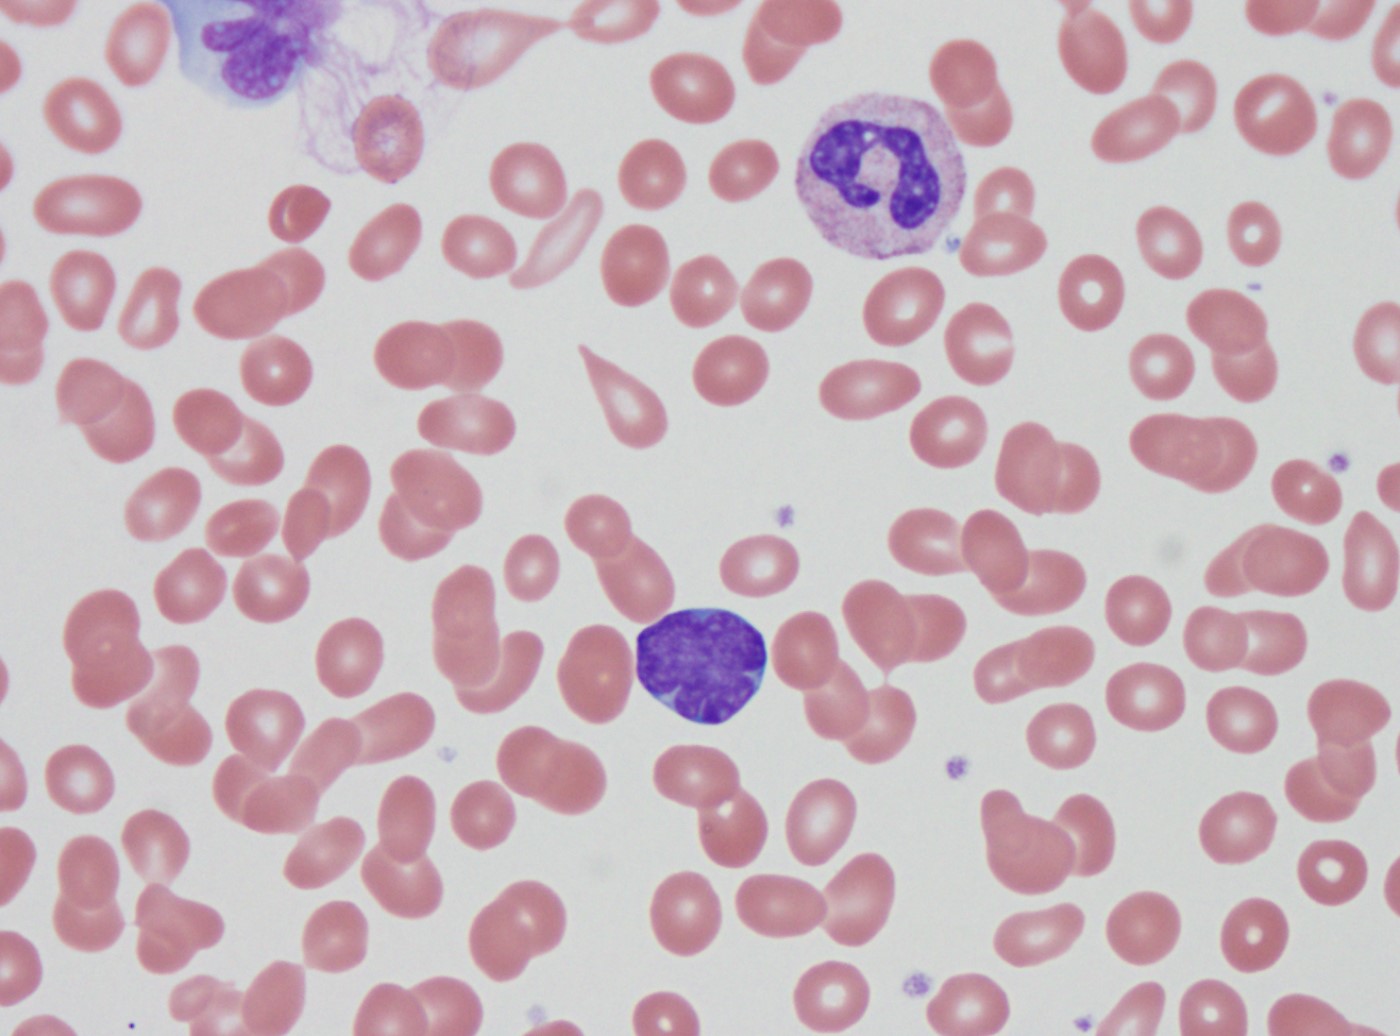 T-lymphoblast on blood smear 